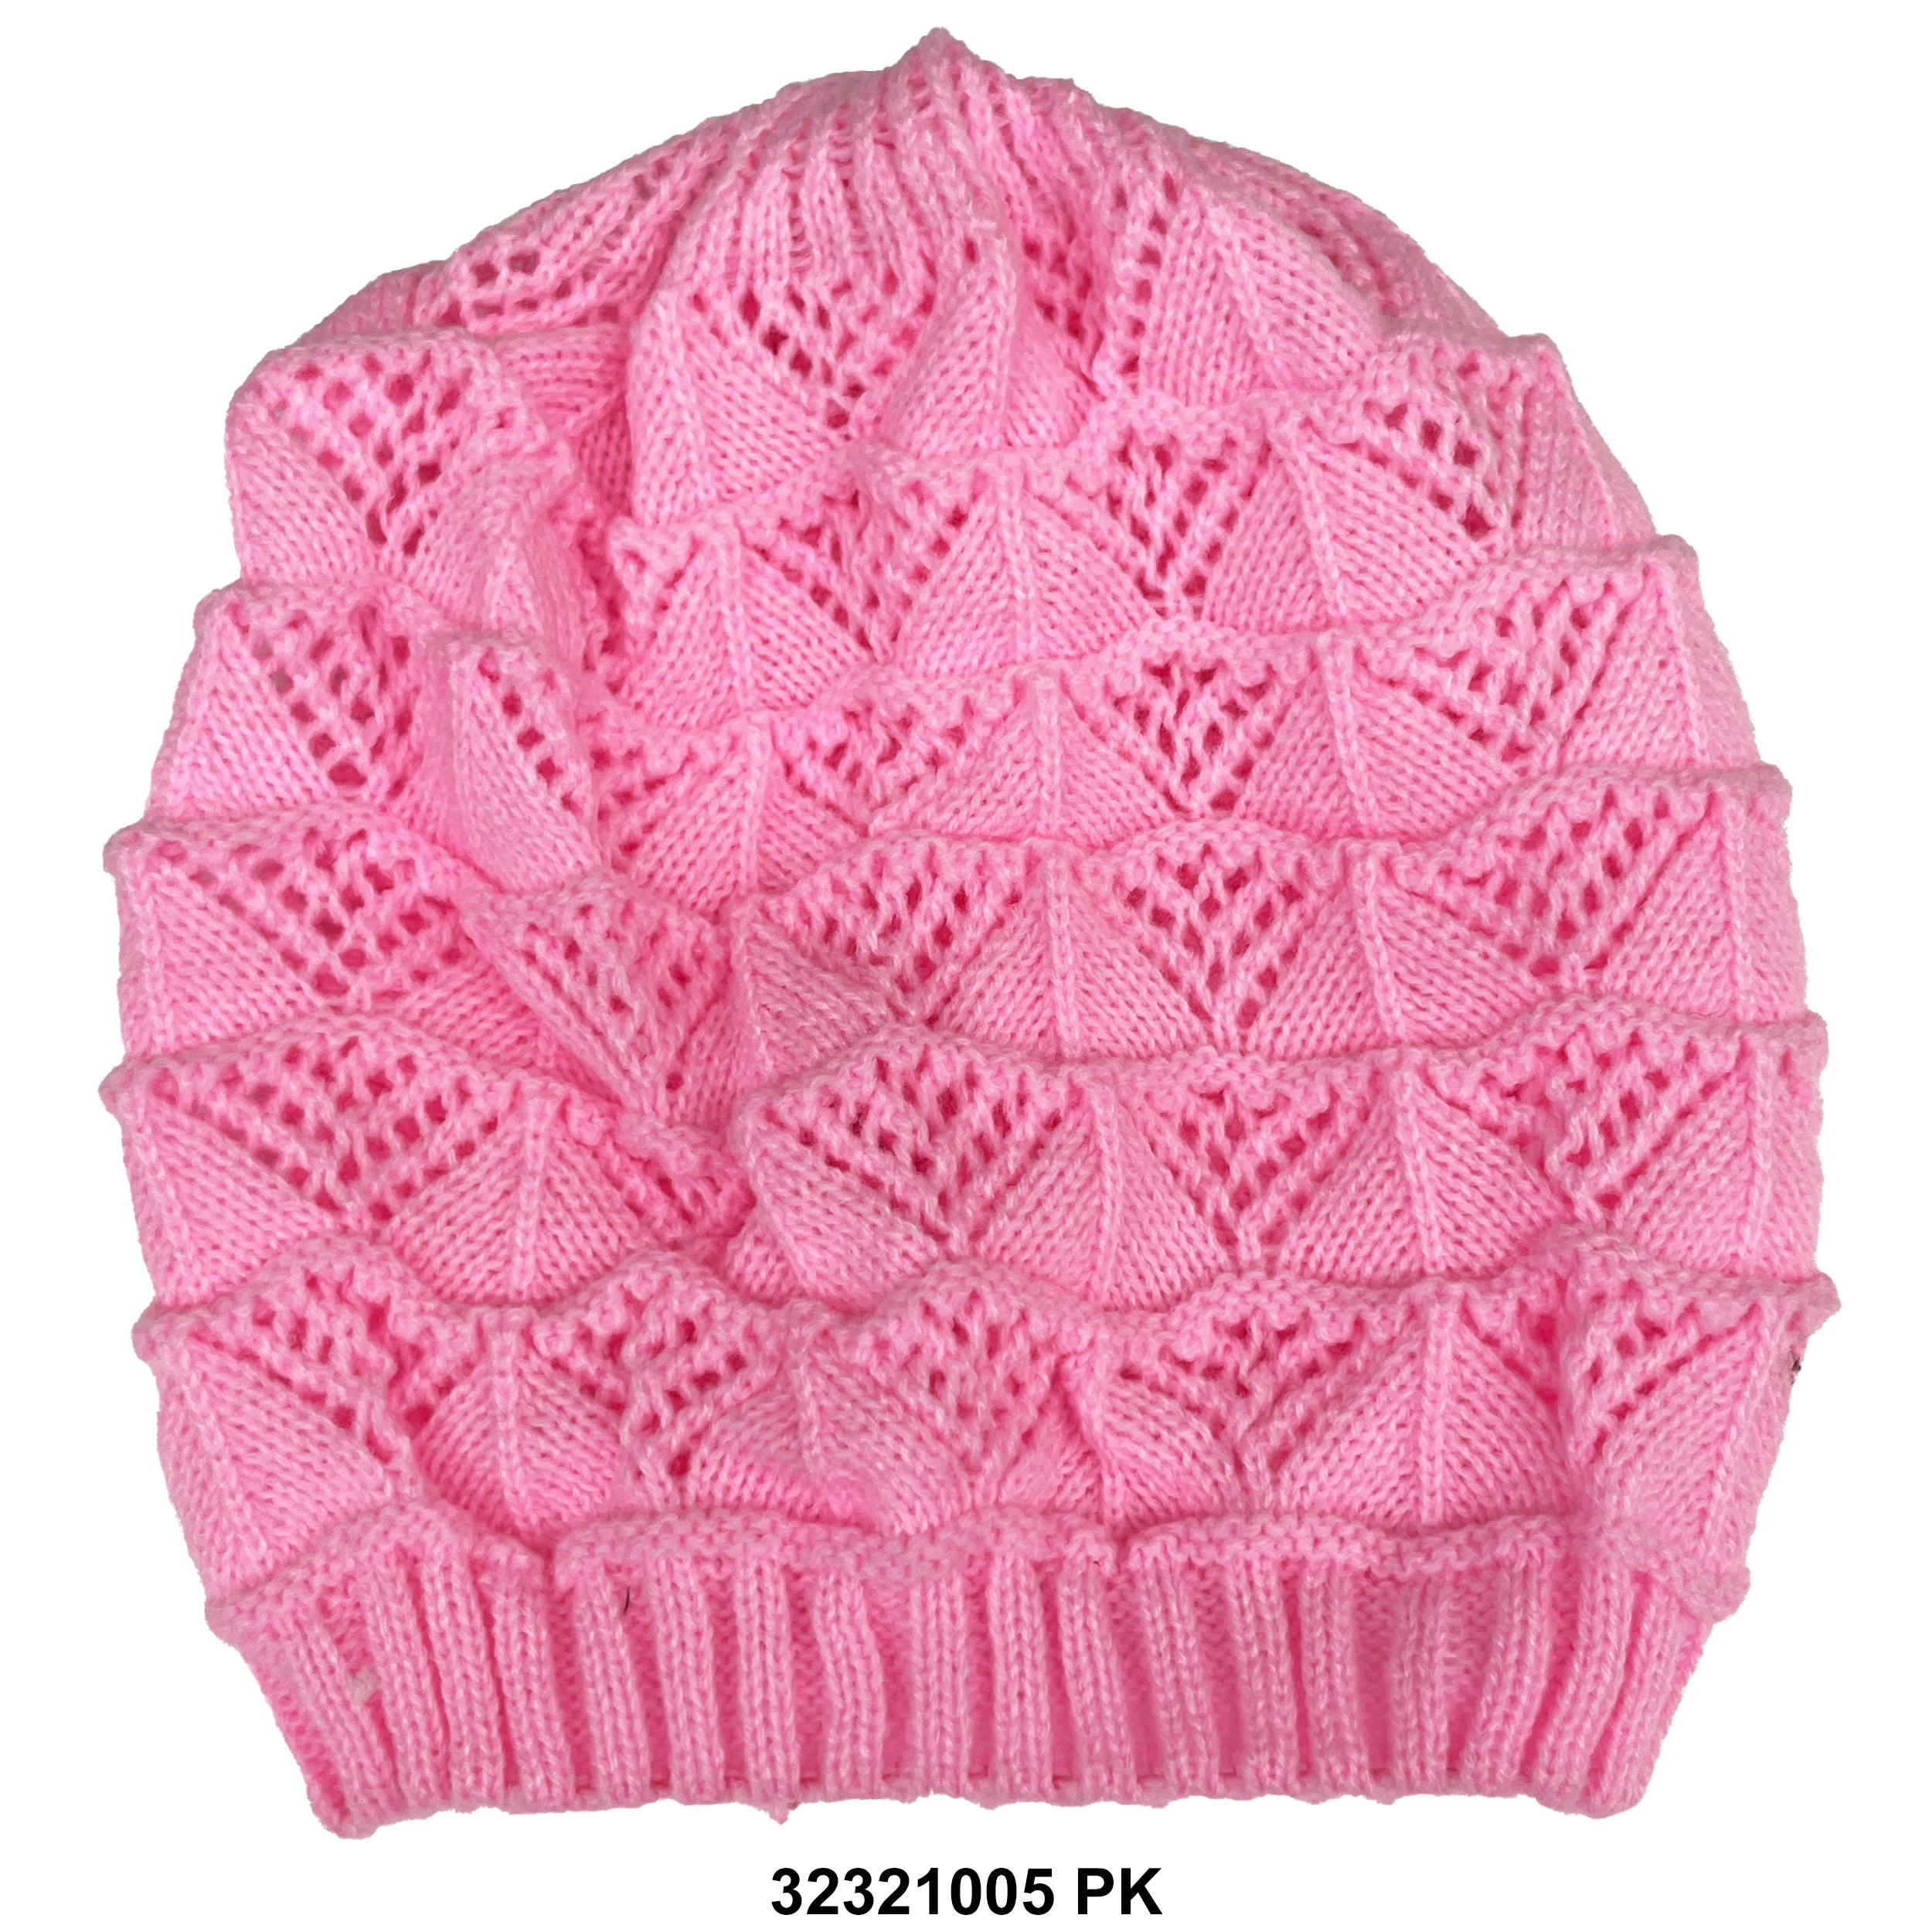 Kids knitted beanie 32321005 PK